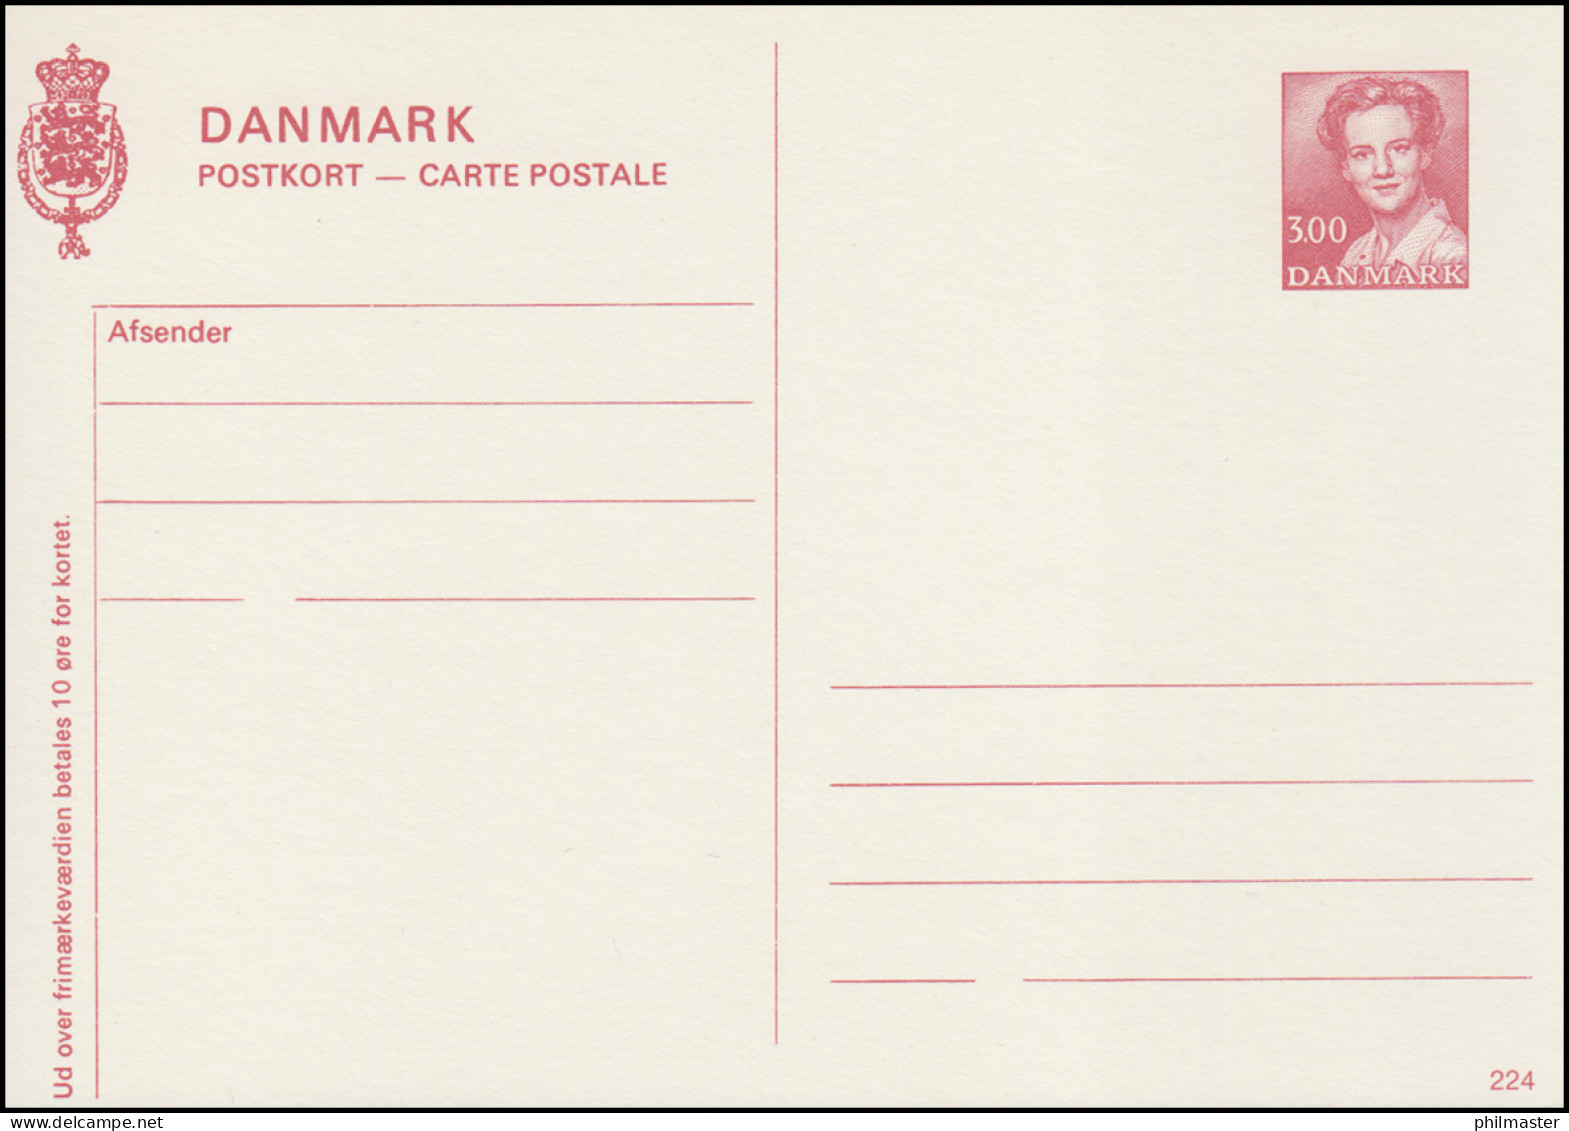 Dänemark Postkarte P 281 Königin Margrethe 3,00 Kronen, Kz. 224, ** - Enteros Postales